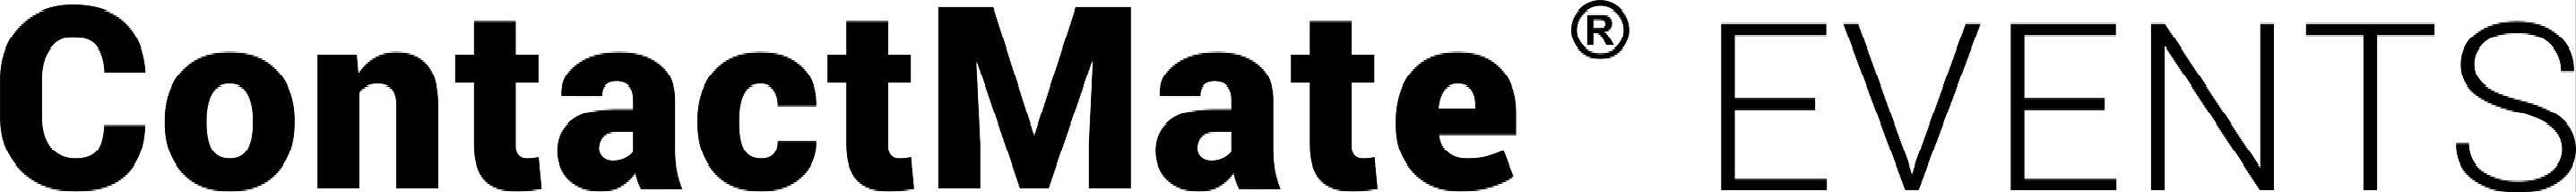 ContactMate-logo